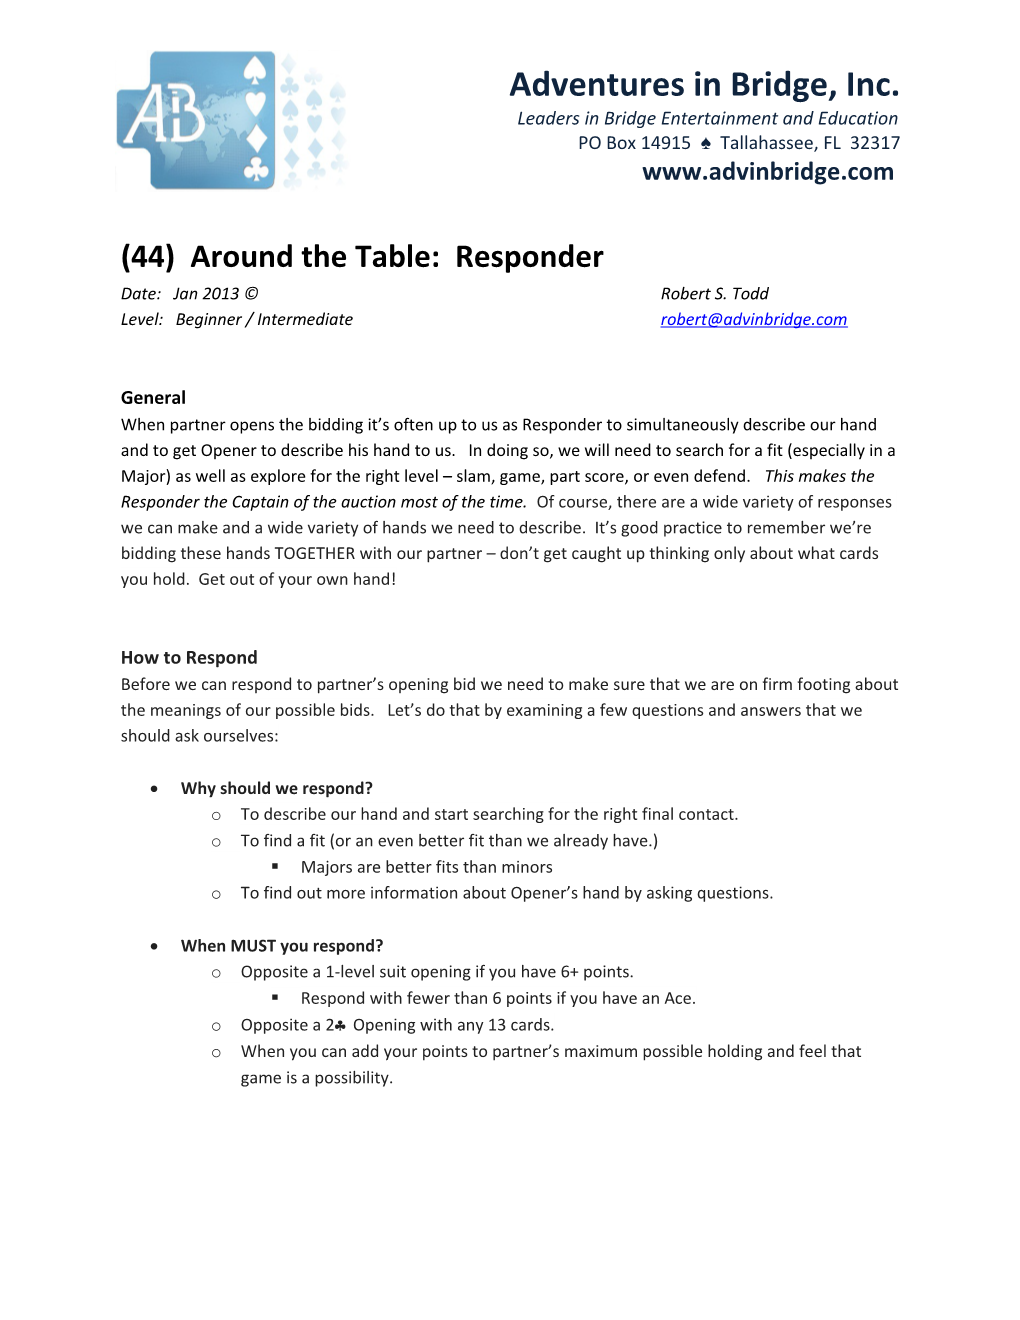 (44) Around the Table: Responder